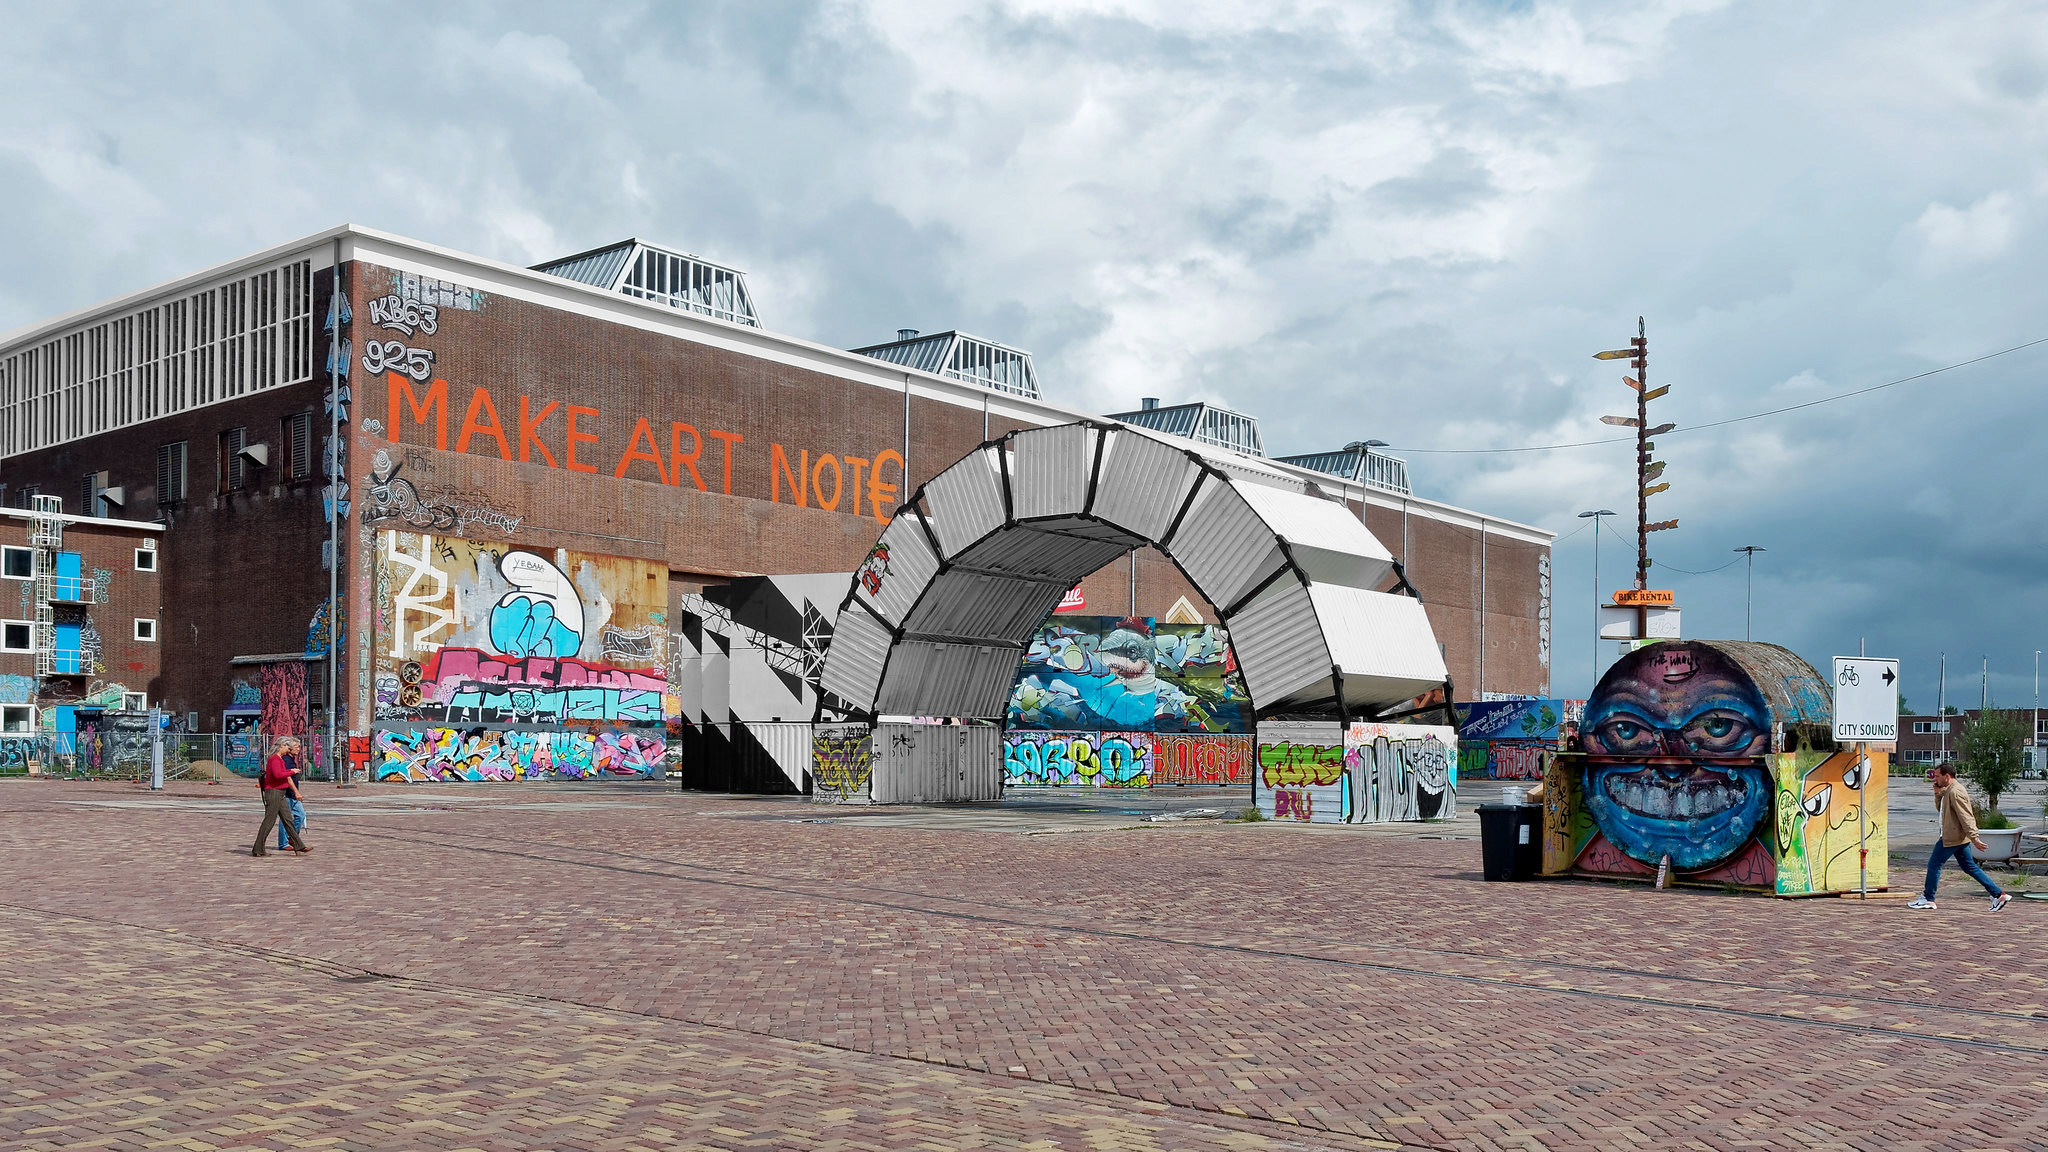 Amsterdam, make art not euros 4910